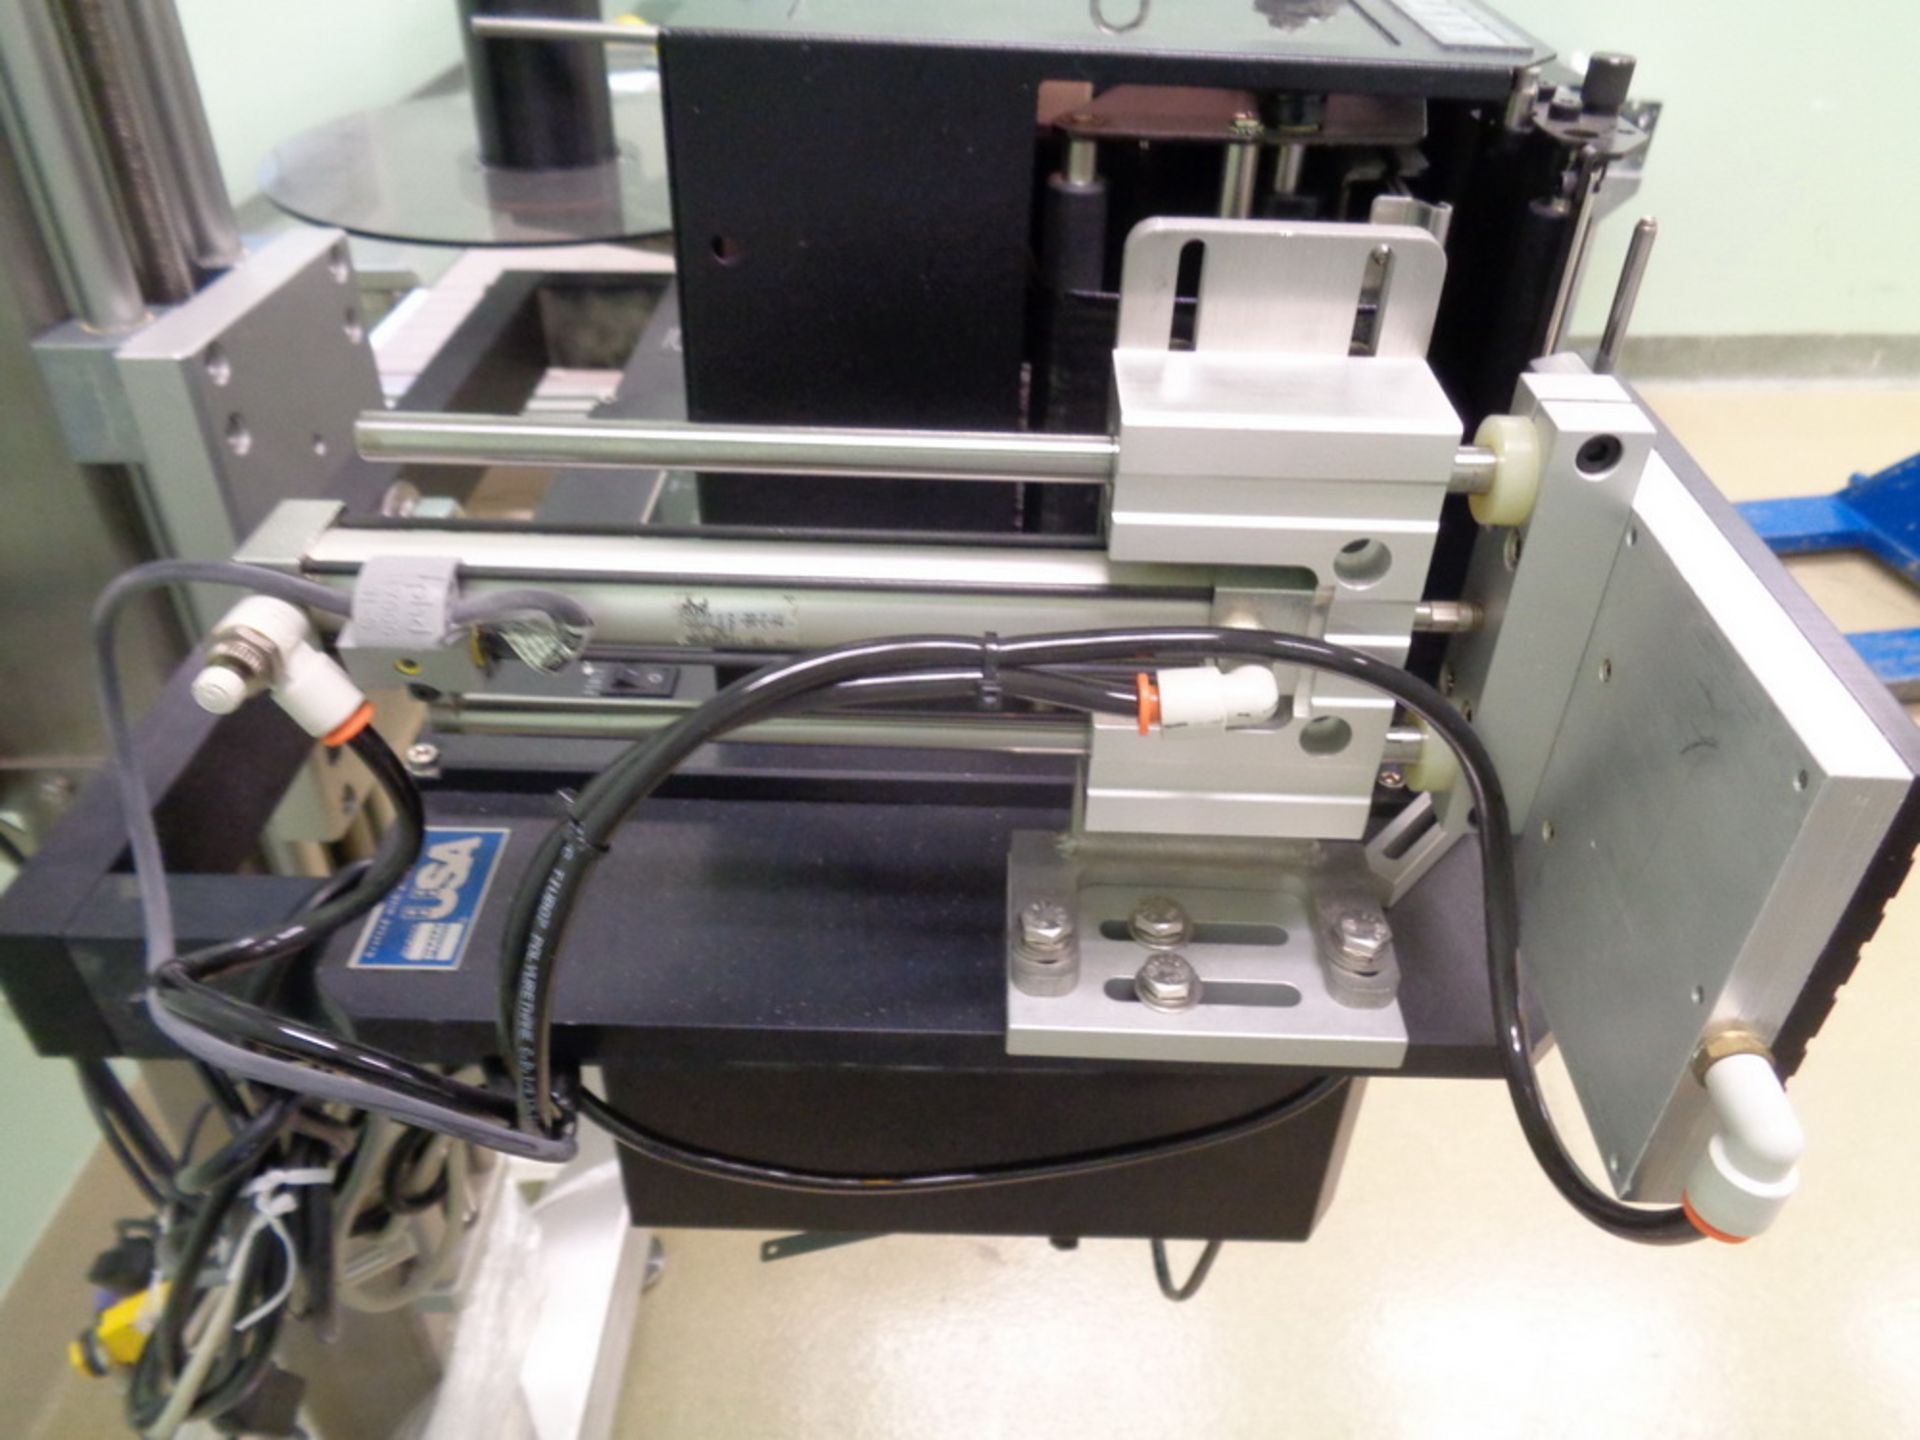 Quadrel Print and Apply Pressure Sensitive Carton Labeler, Model Q31-LS8490, S/N 57957-01 - Image 5 of 13